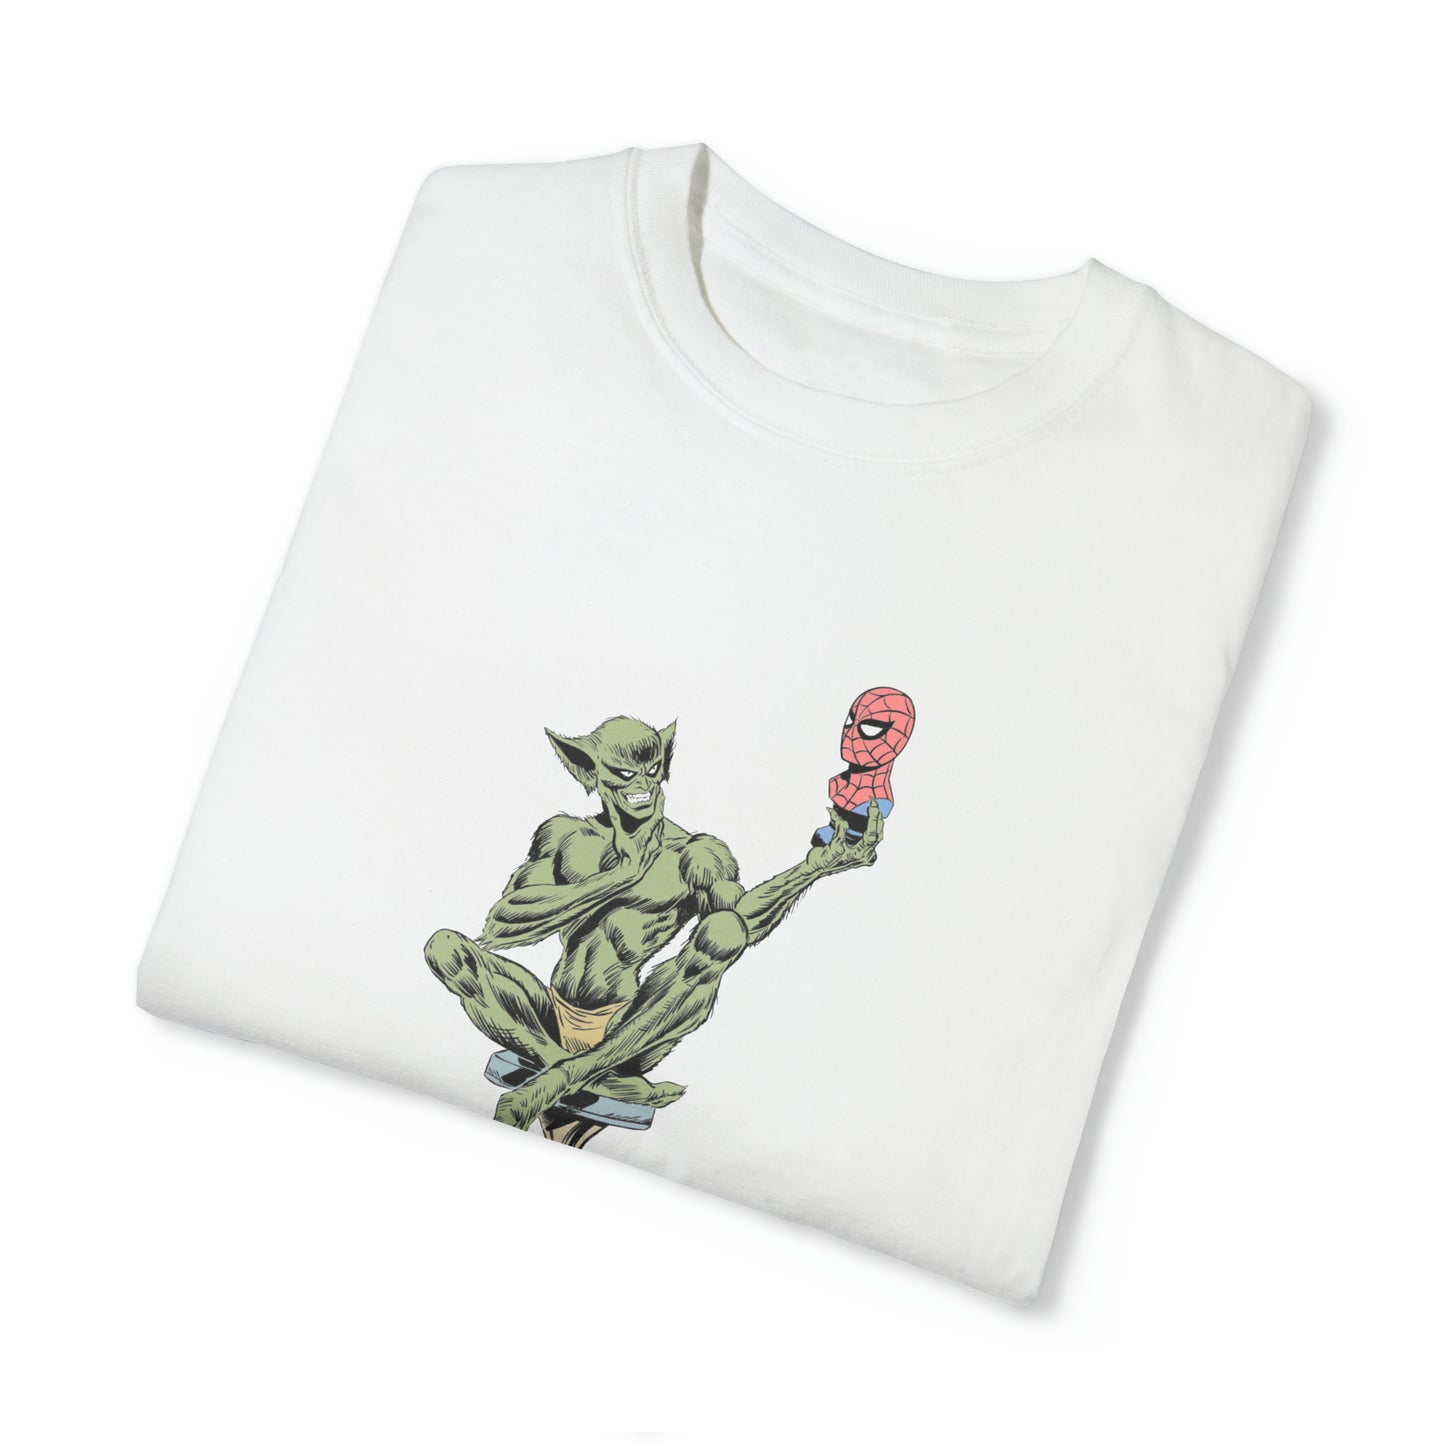 Jackal Marvel - Peter Parker Is Dead. Bootleg! (Pls!) - Unisex Garment-Dyed T-shirt